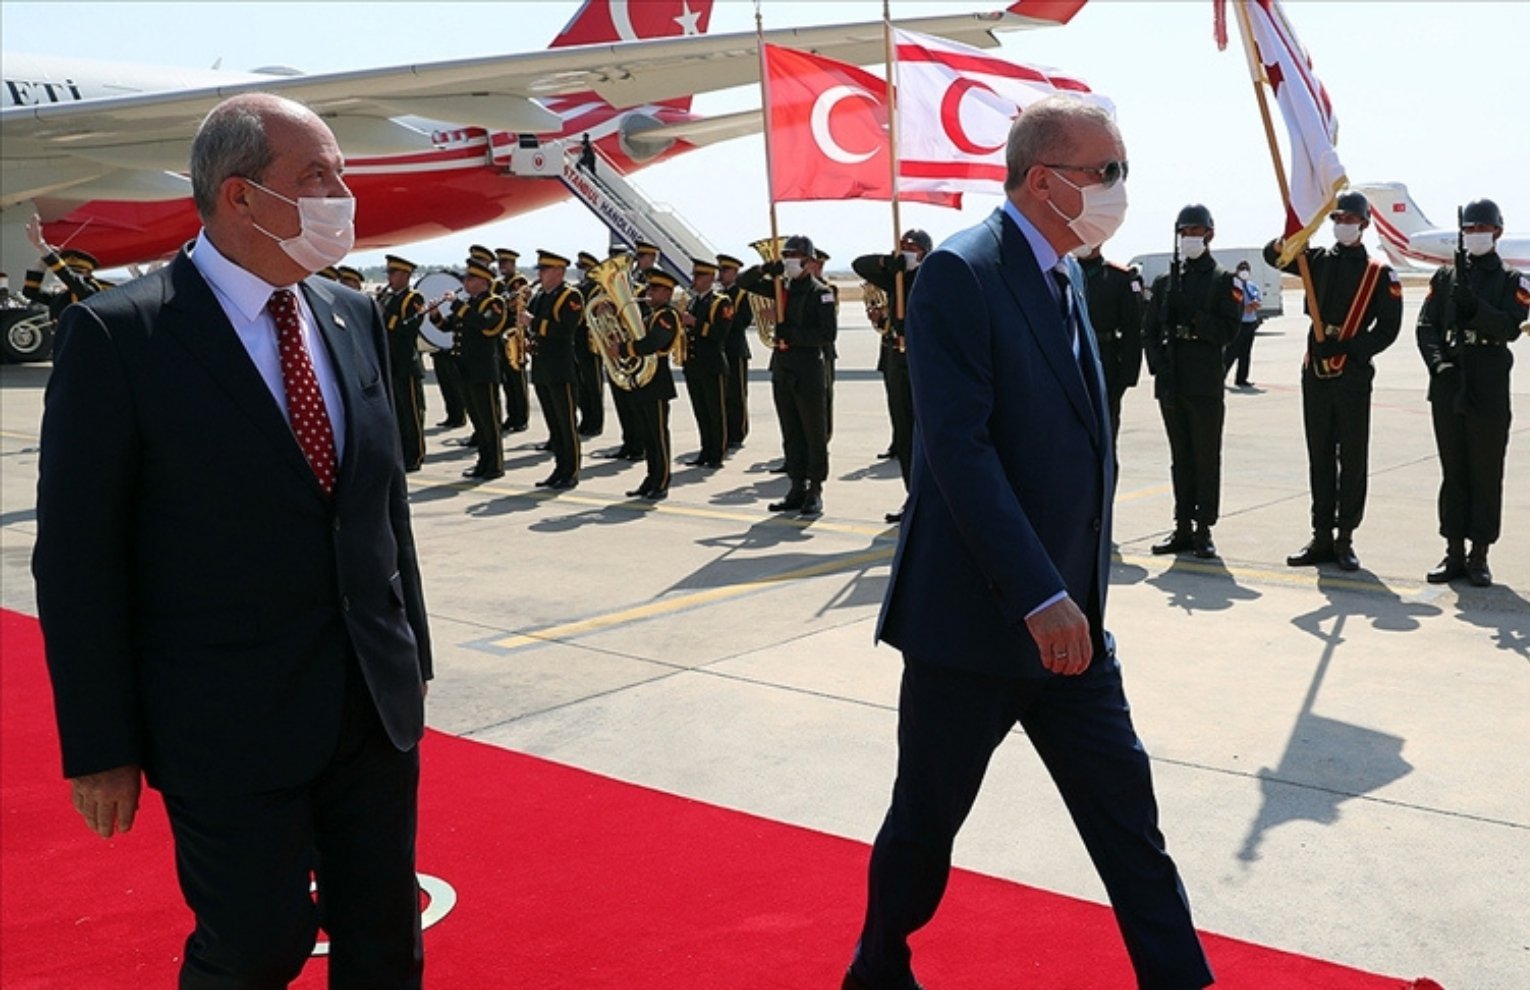 Northern Cyprus: Opposition boycotts Erdoğan's visit to parliament